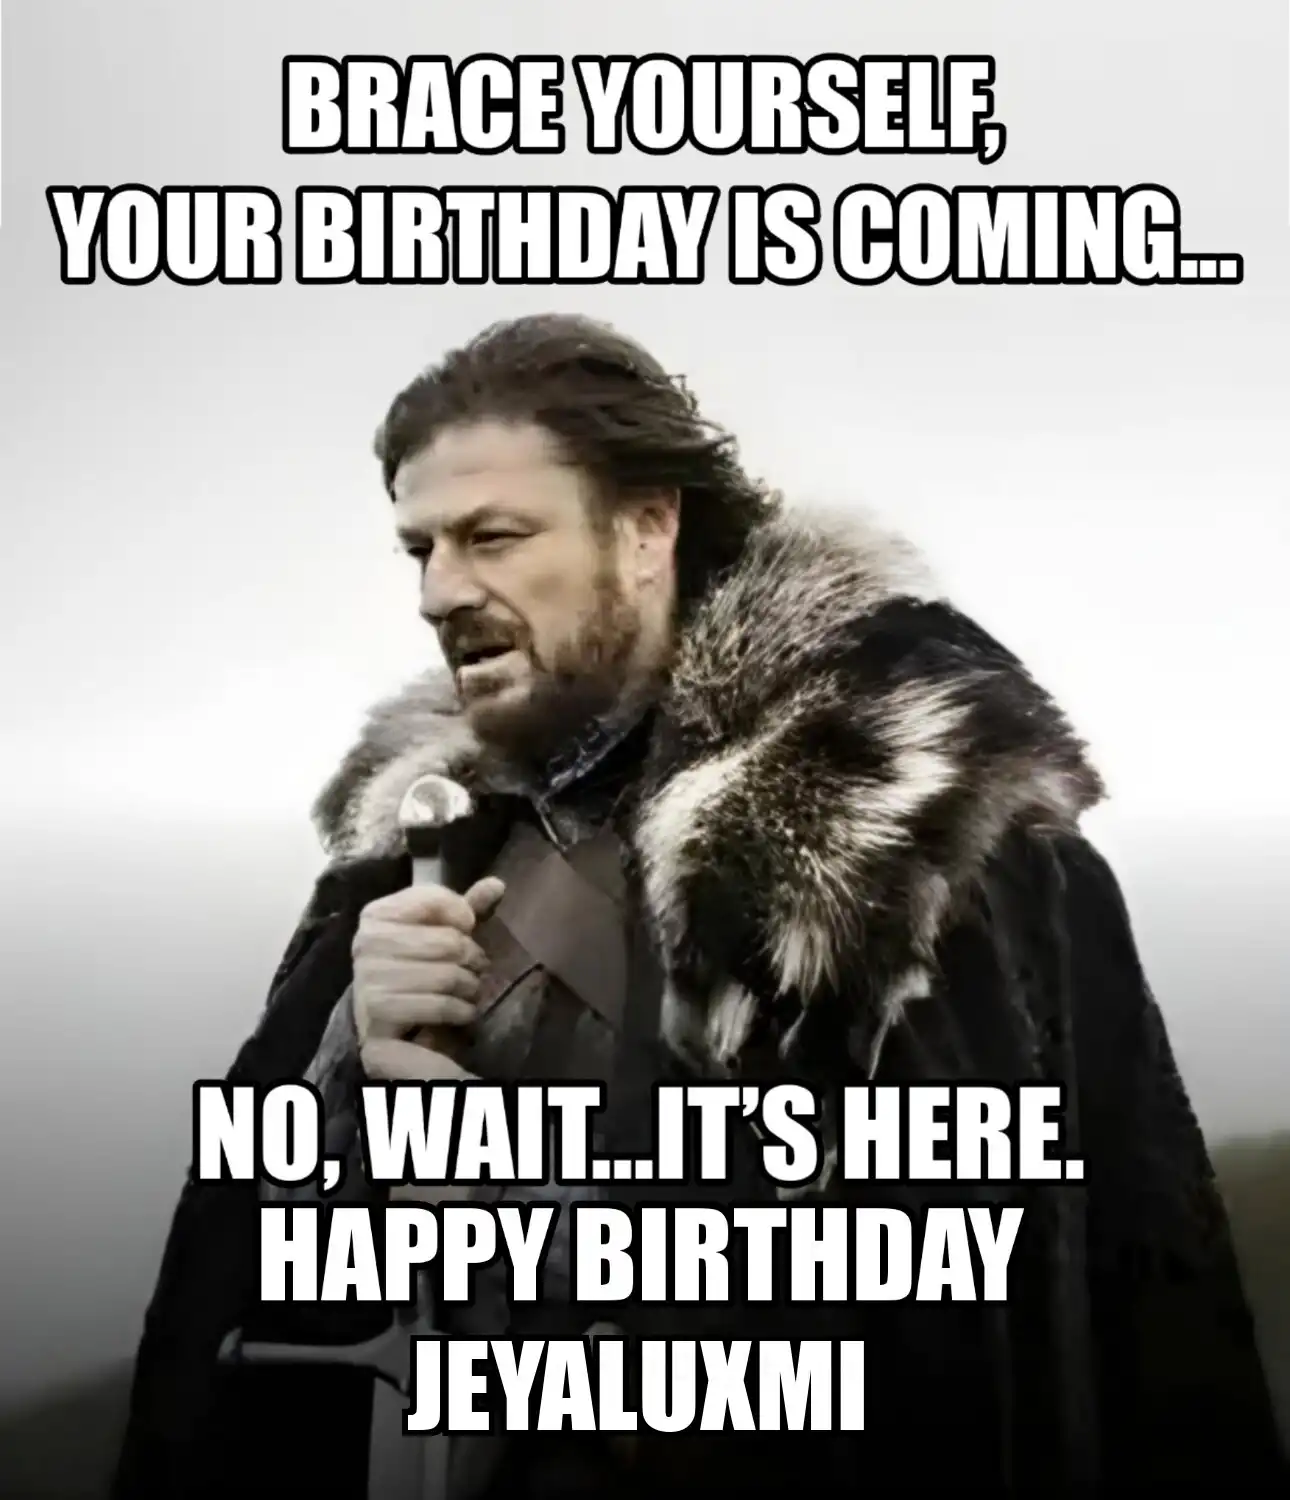 Happy Birthday Jeyaluxmi Brace Yourself Your Birthday Is Coming Meme